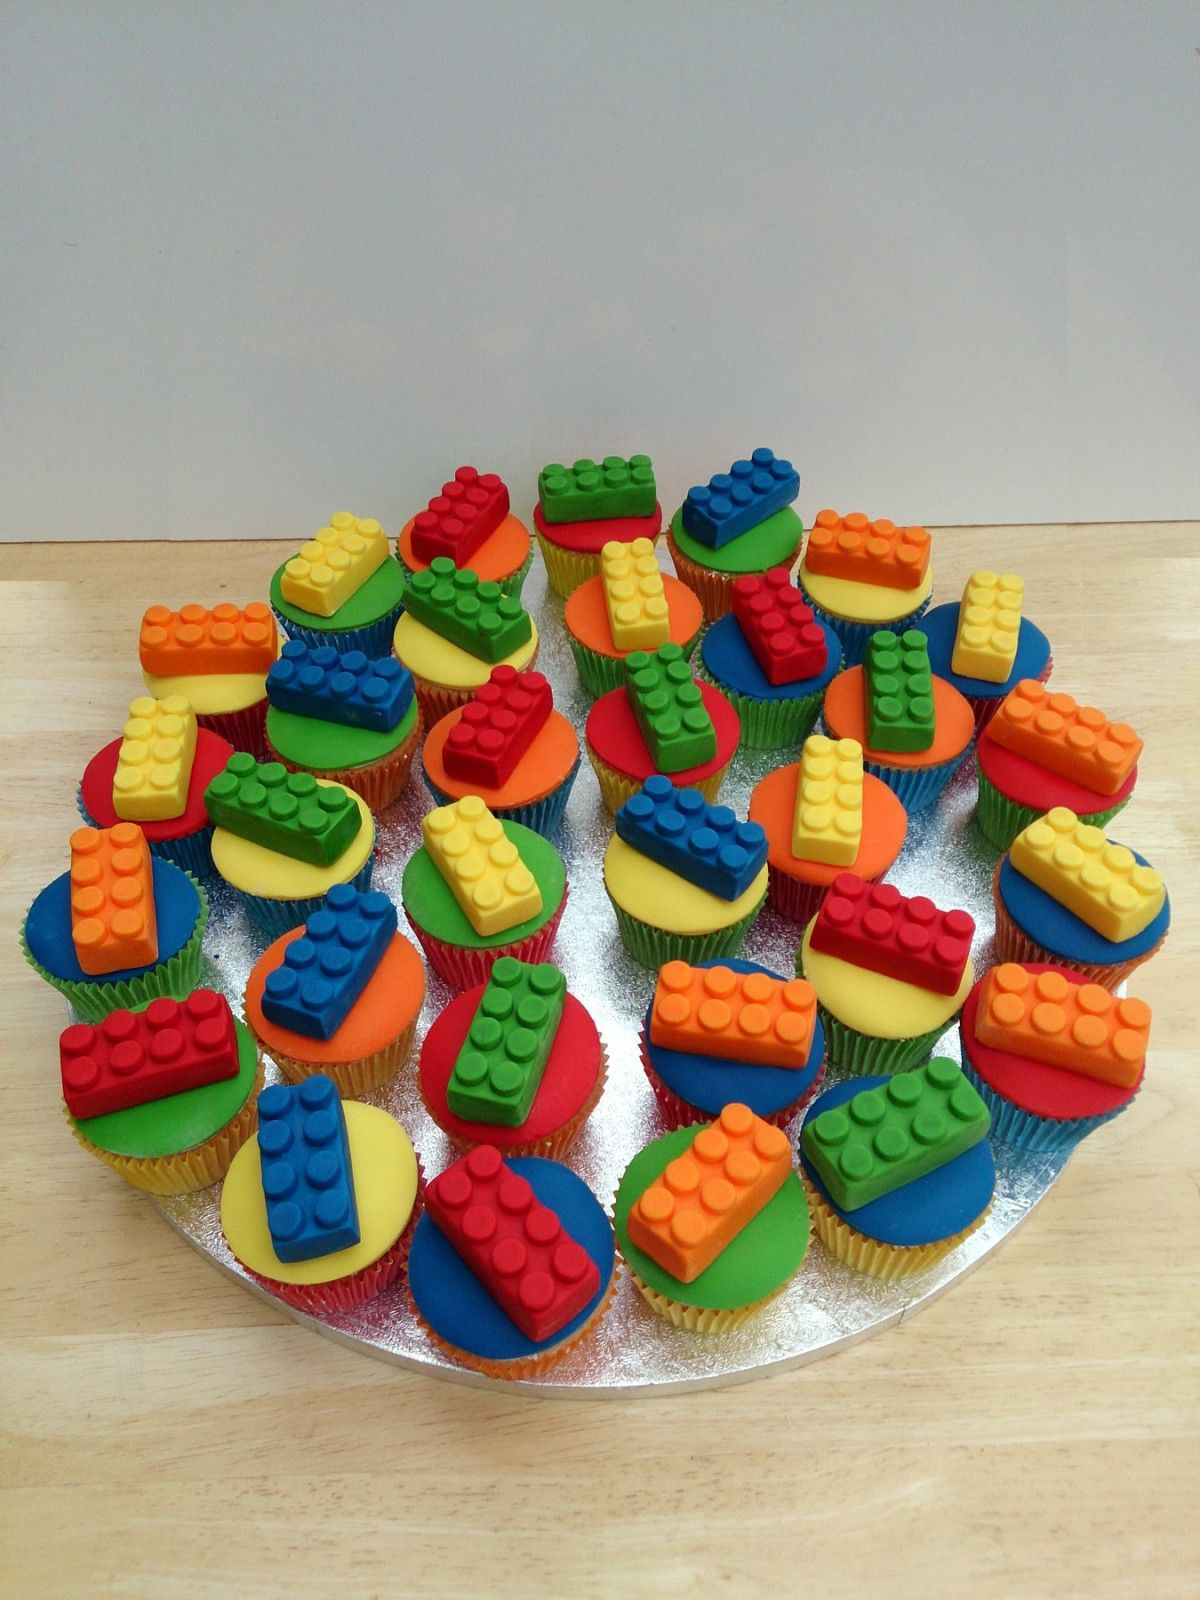 Best ideas about Lego Birthday Cake Walmart
. Save or Pin lego cupcakes walmart PARTY IDEAS Now.